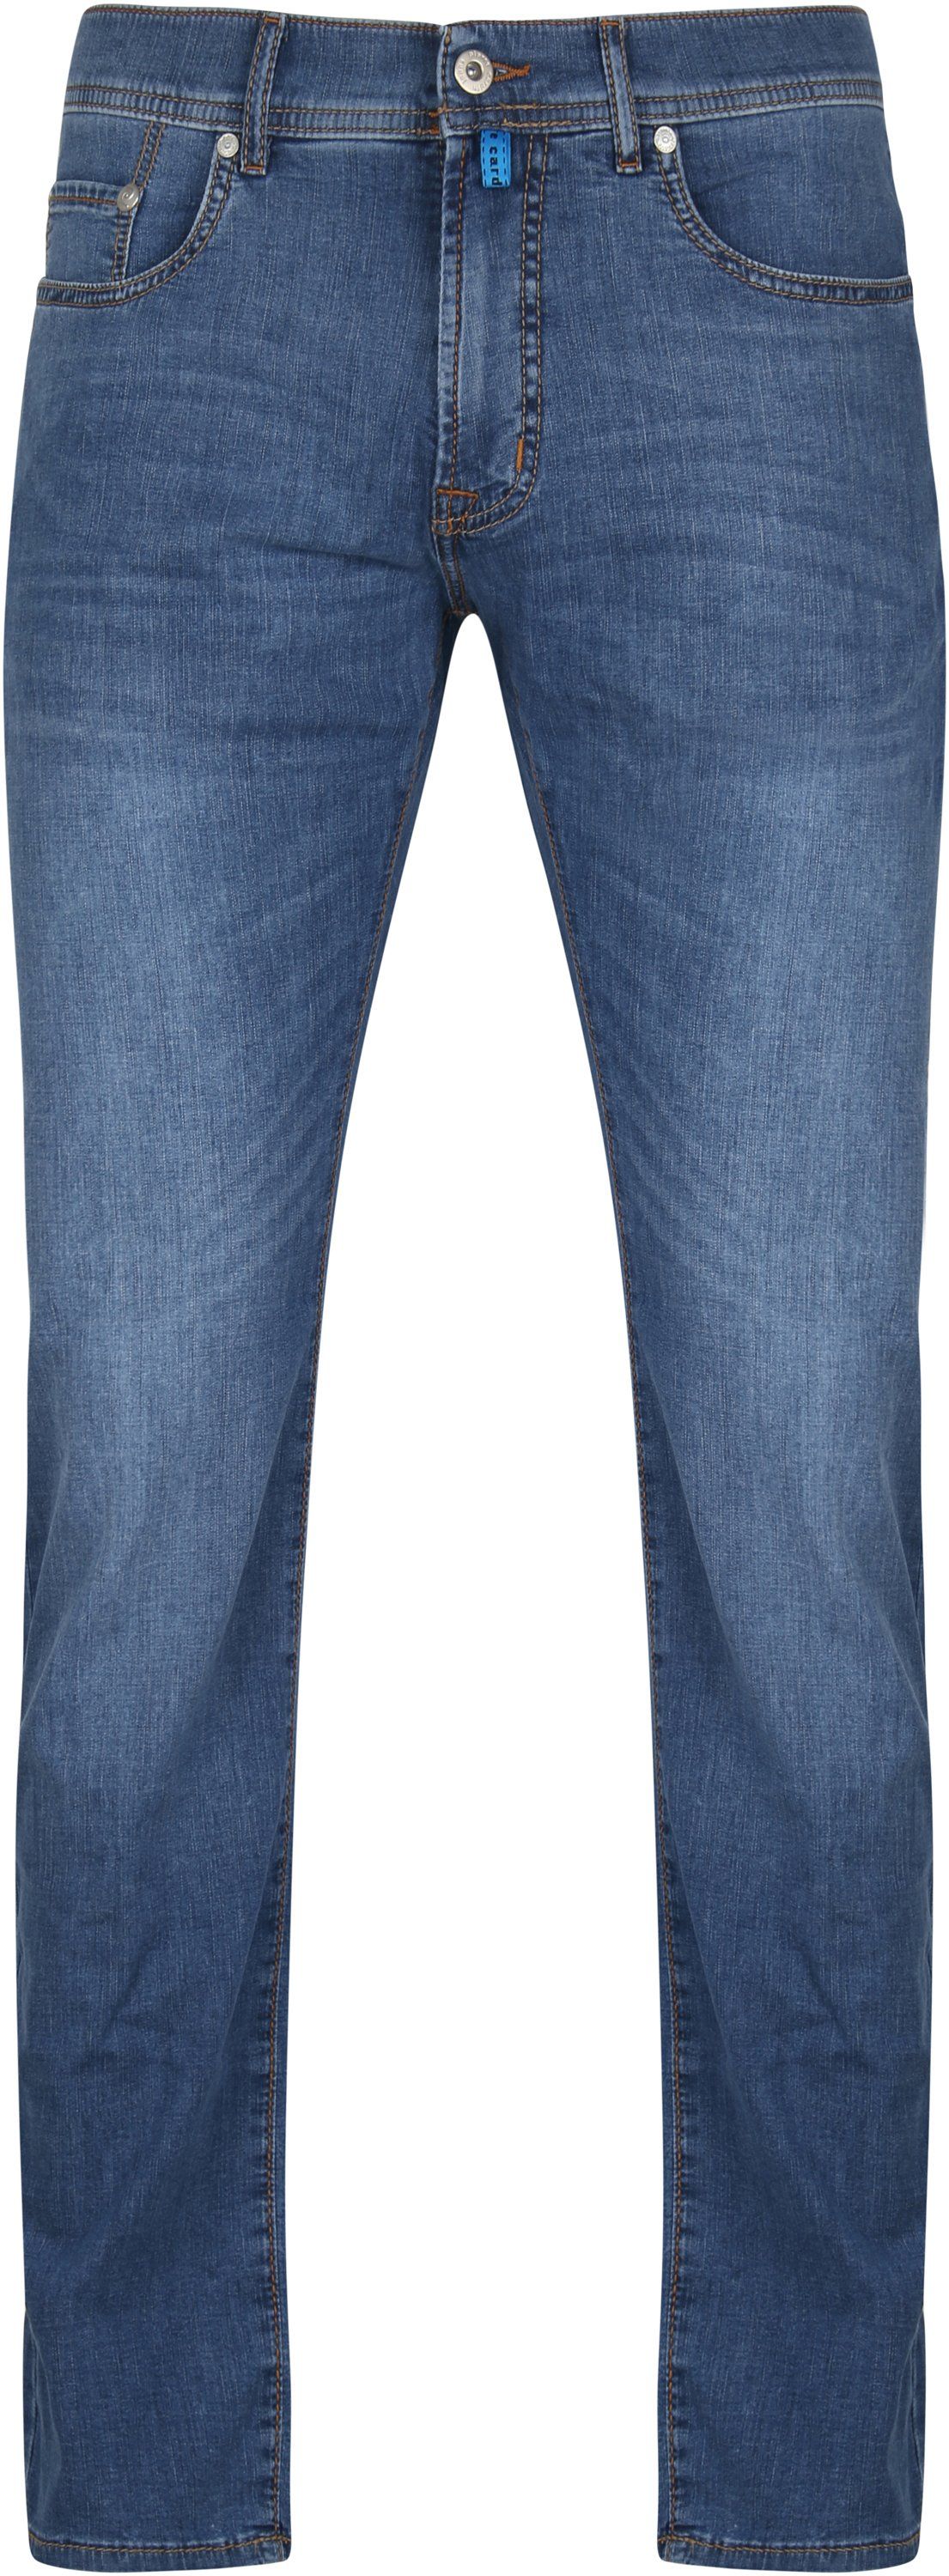 Pierre Cardin Jeans Lyon Clima Control Blue size W 31